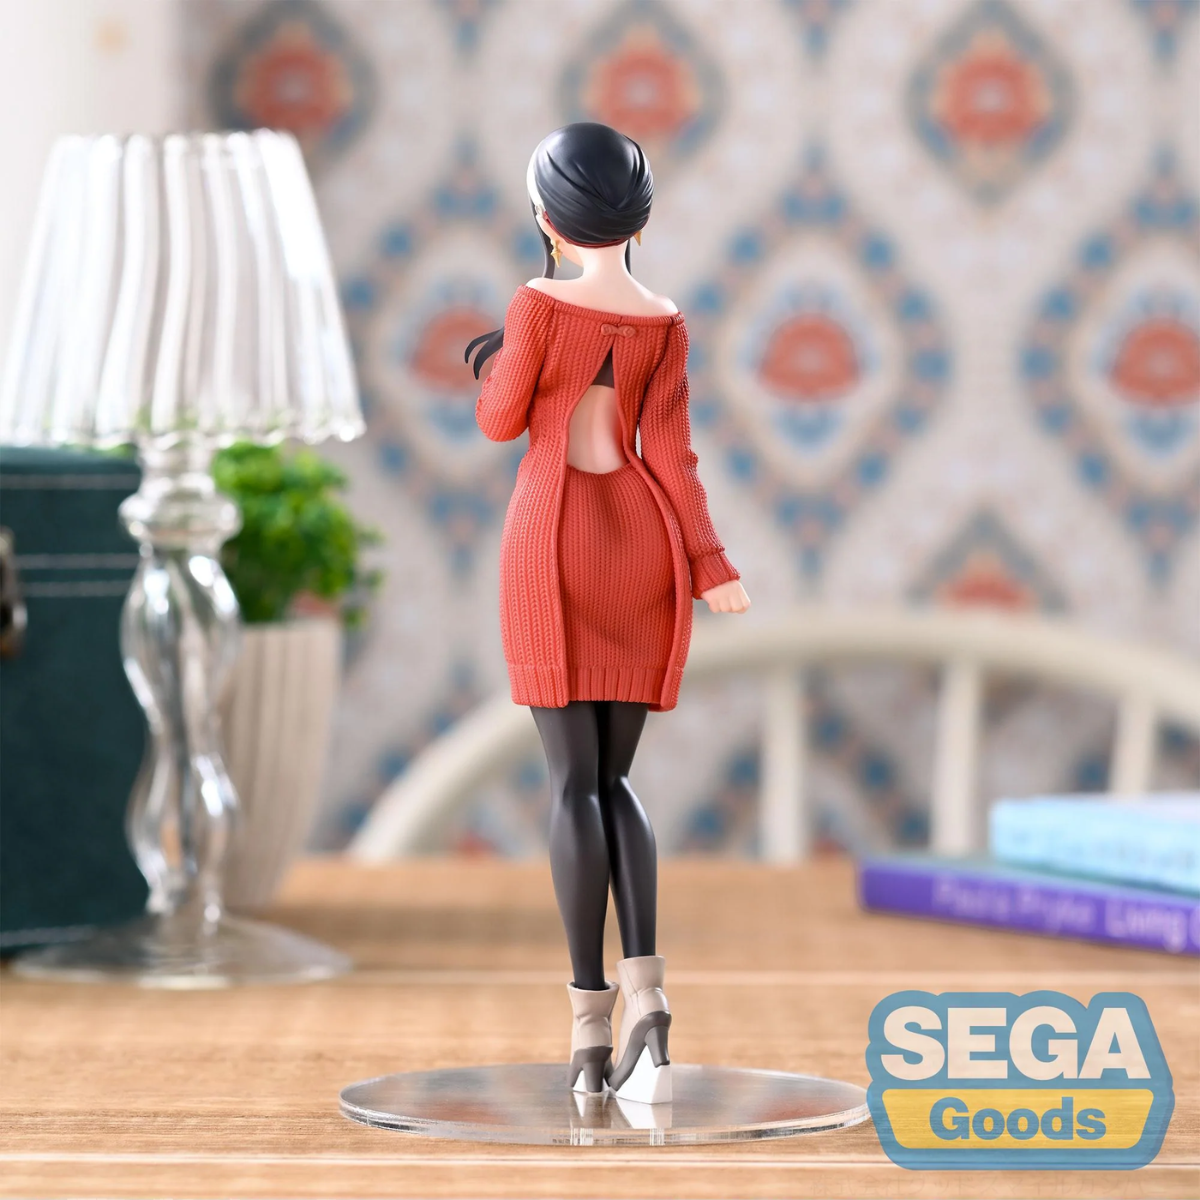 Spy X Family PM Figure "Yor Forger" (Plain Clothes)-Sega-Ace Cards & Collectibles